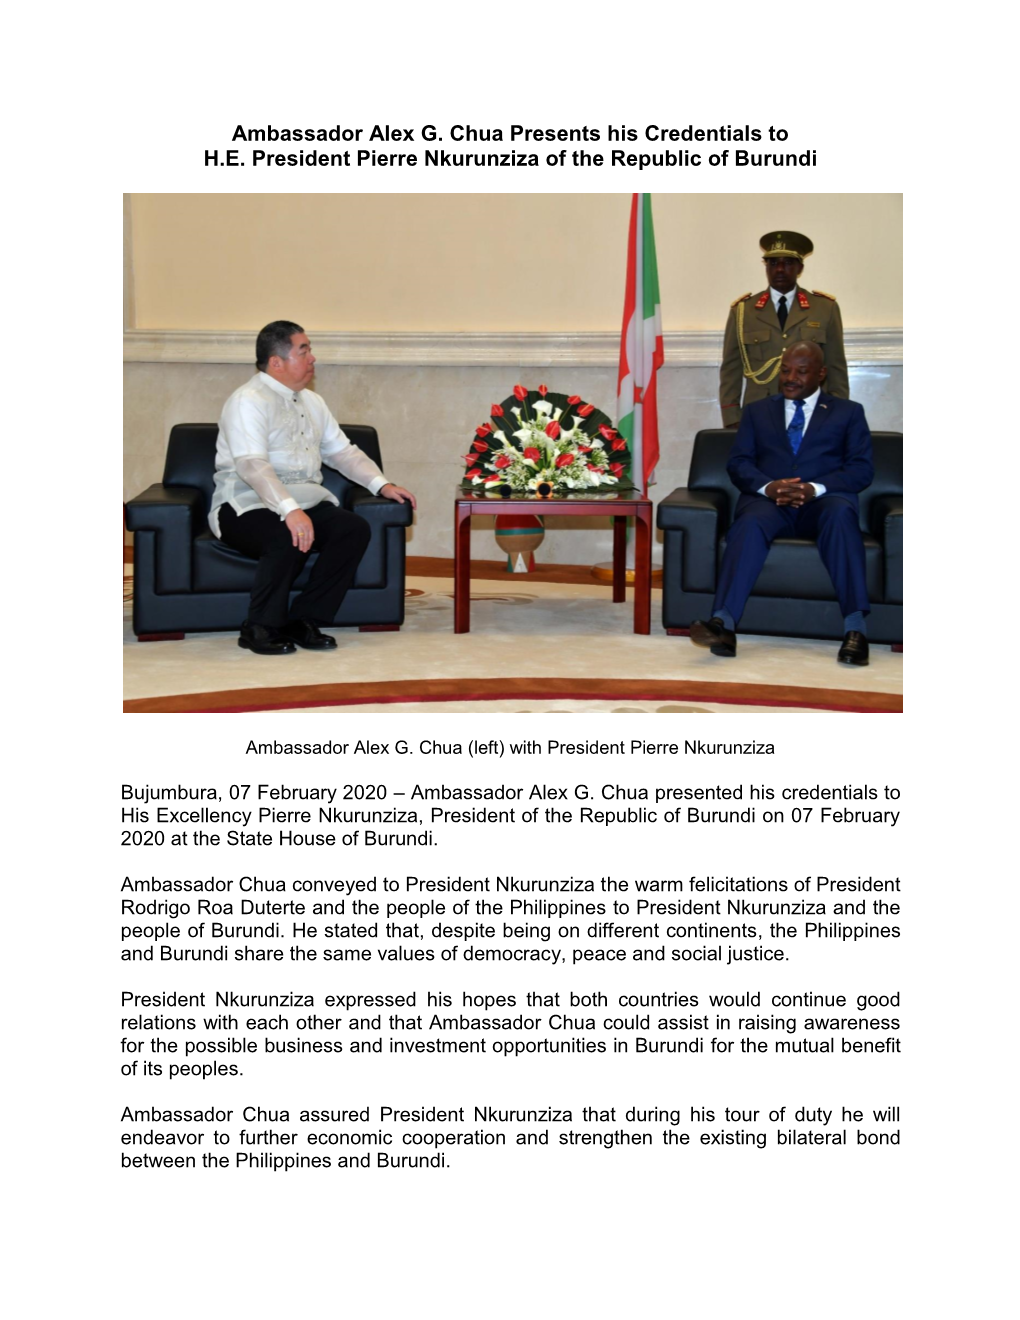 Ambassador Alex G. Chua Presents His Credentials to H.E. President Pierre Nkurunziza of the Republic of Burundi